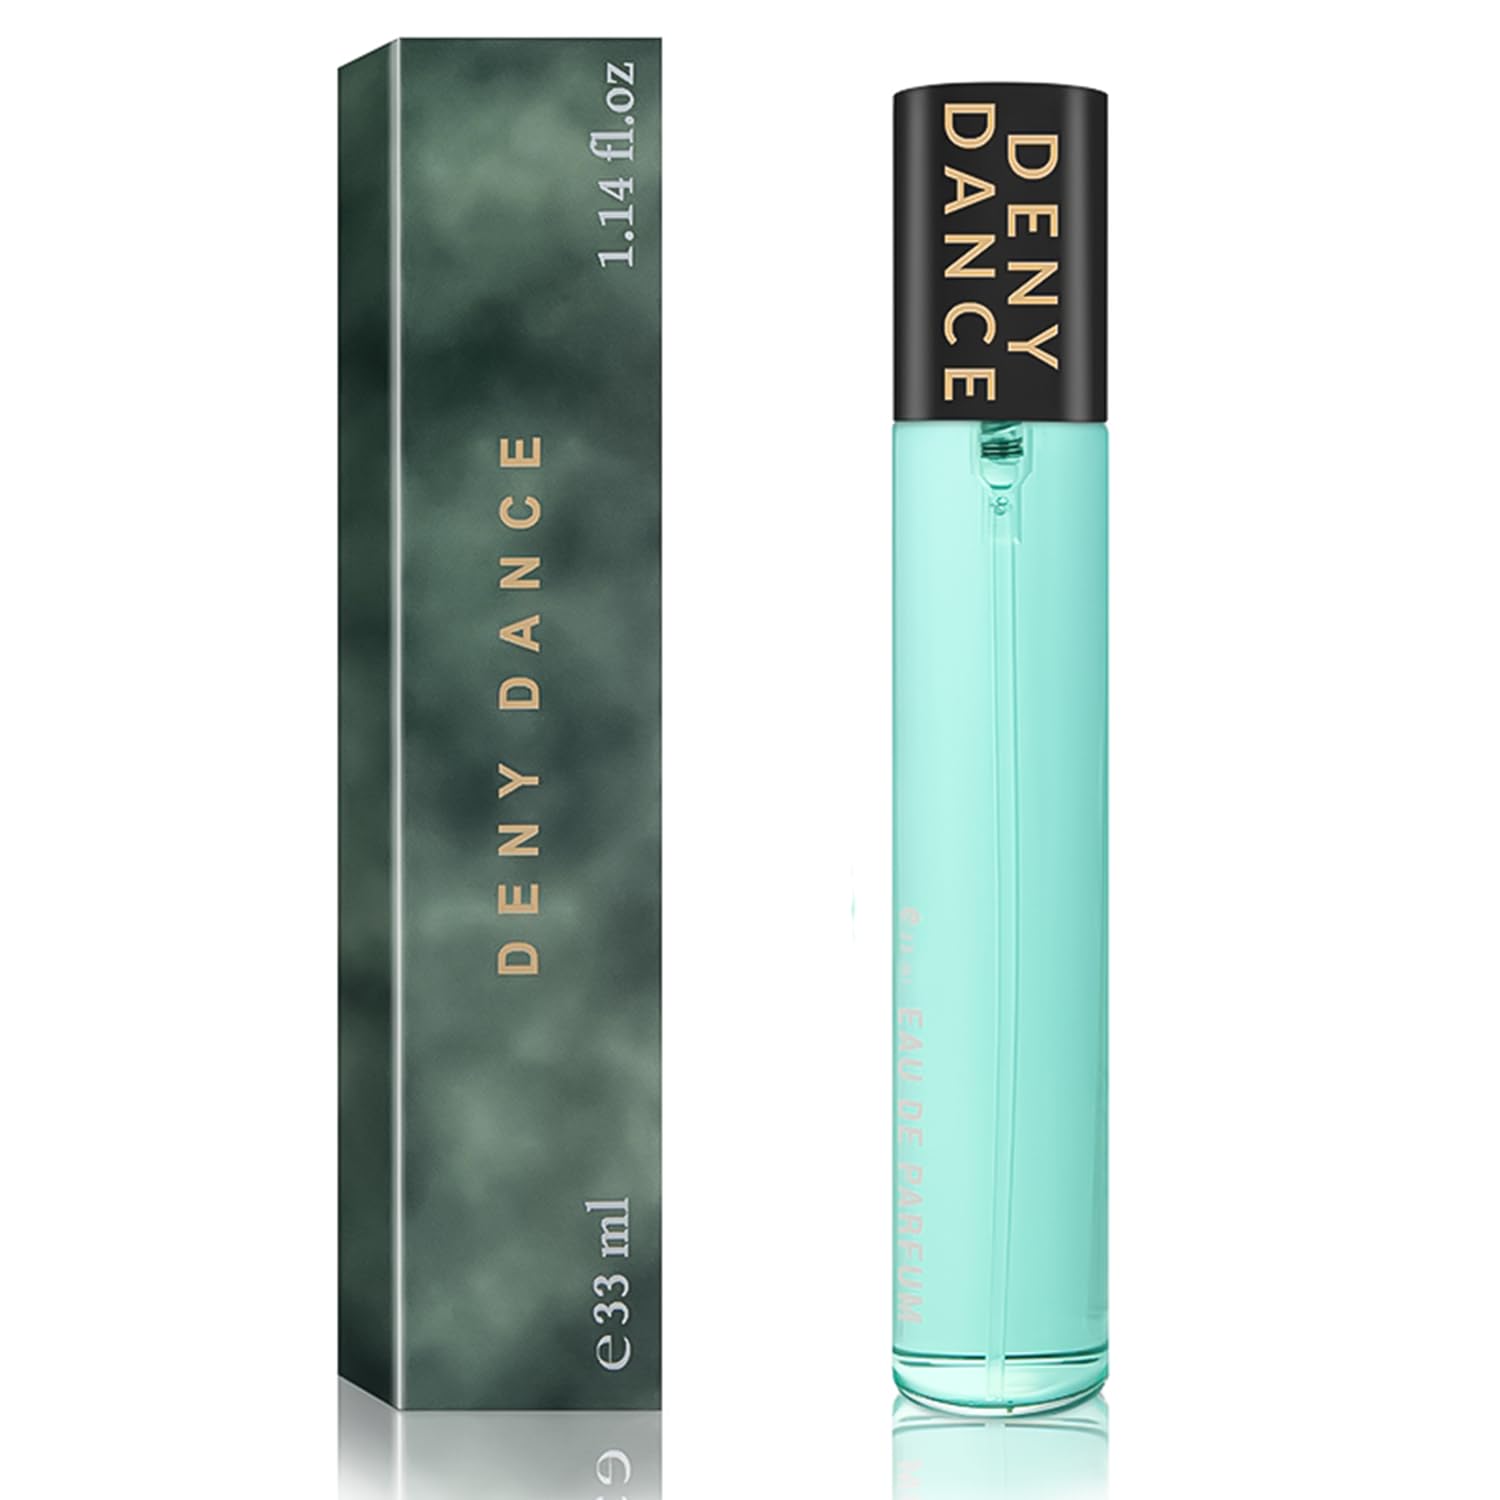 Perfume Women\'s Fragrance Spray - The Inspired Pendant as Eau de Parfum for Driver and Car - 33 ml Bottle for Handbag & On the Go (DENY DANCE)